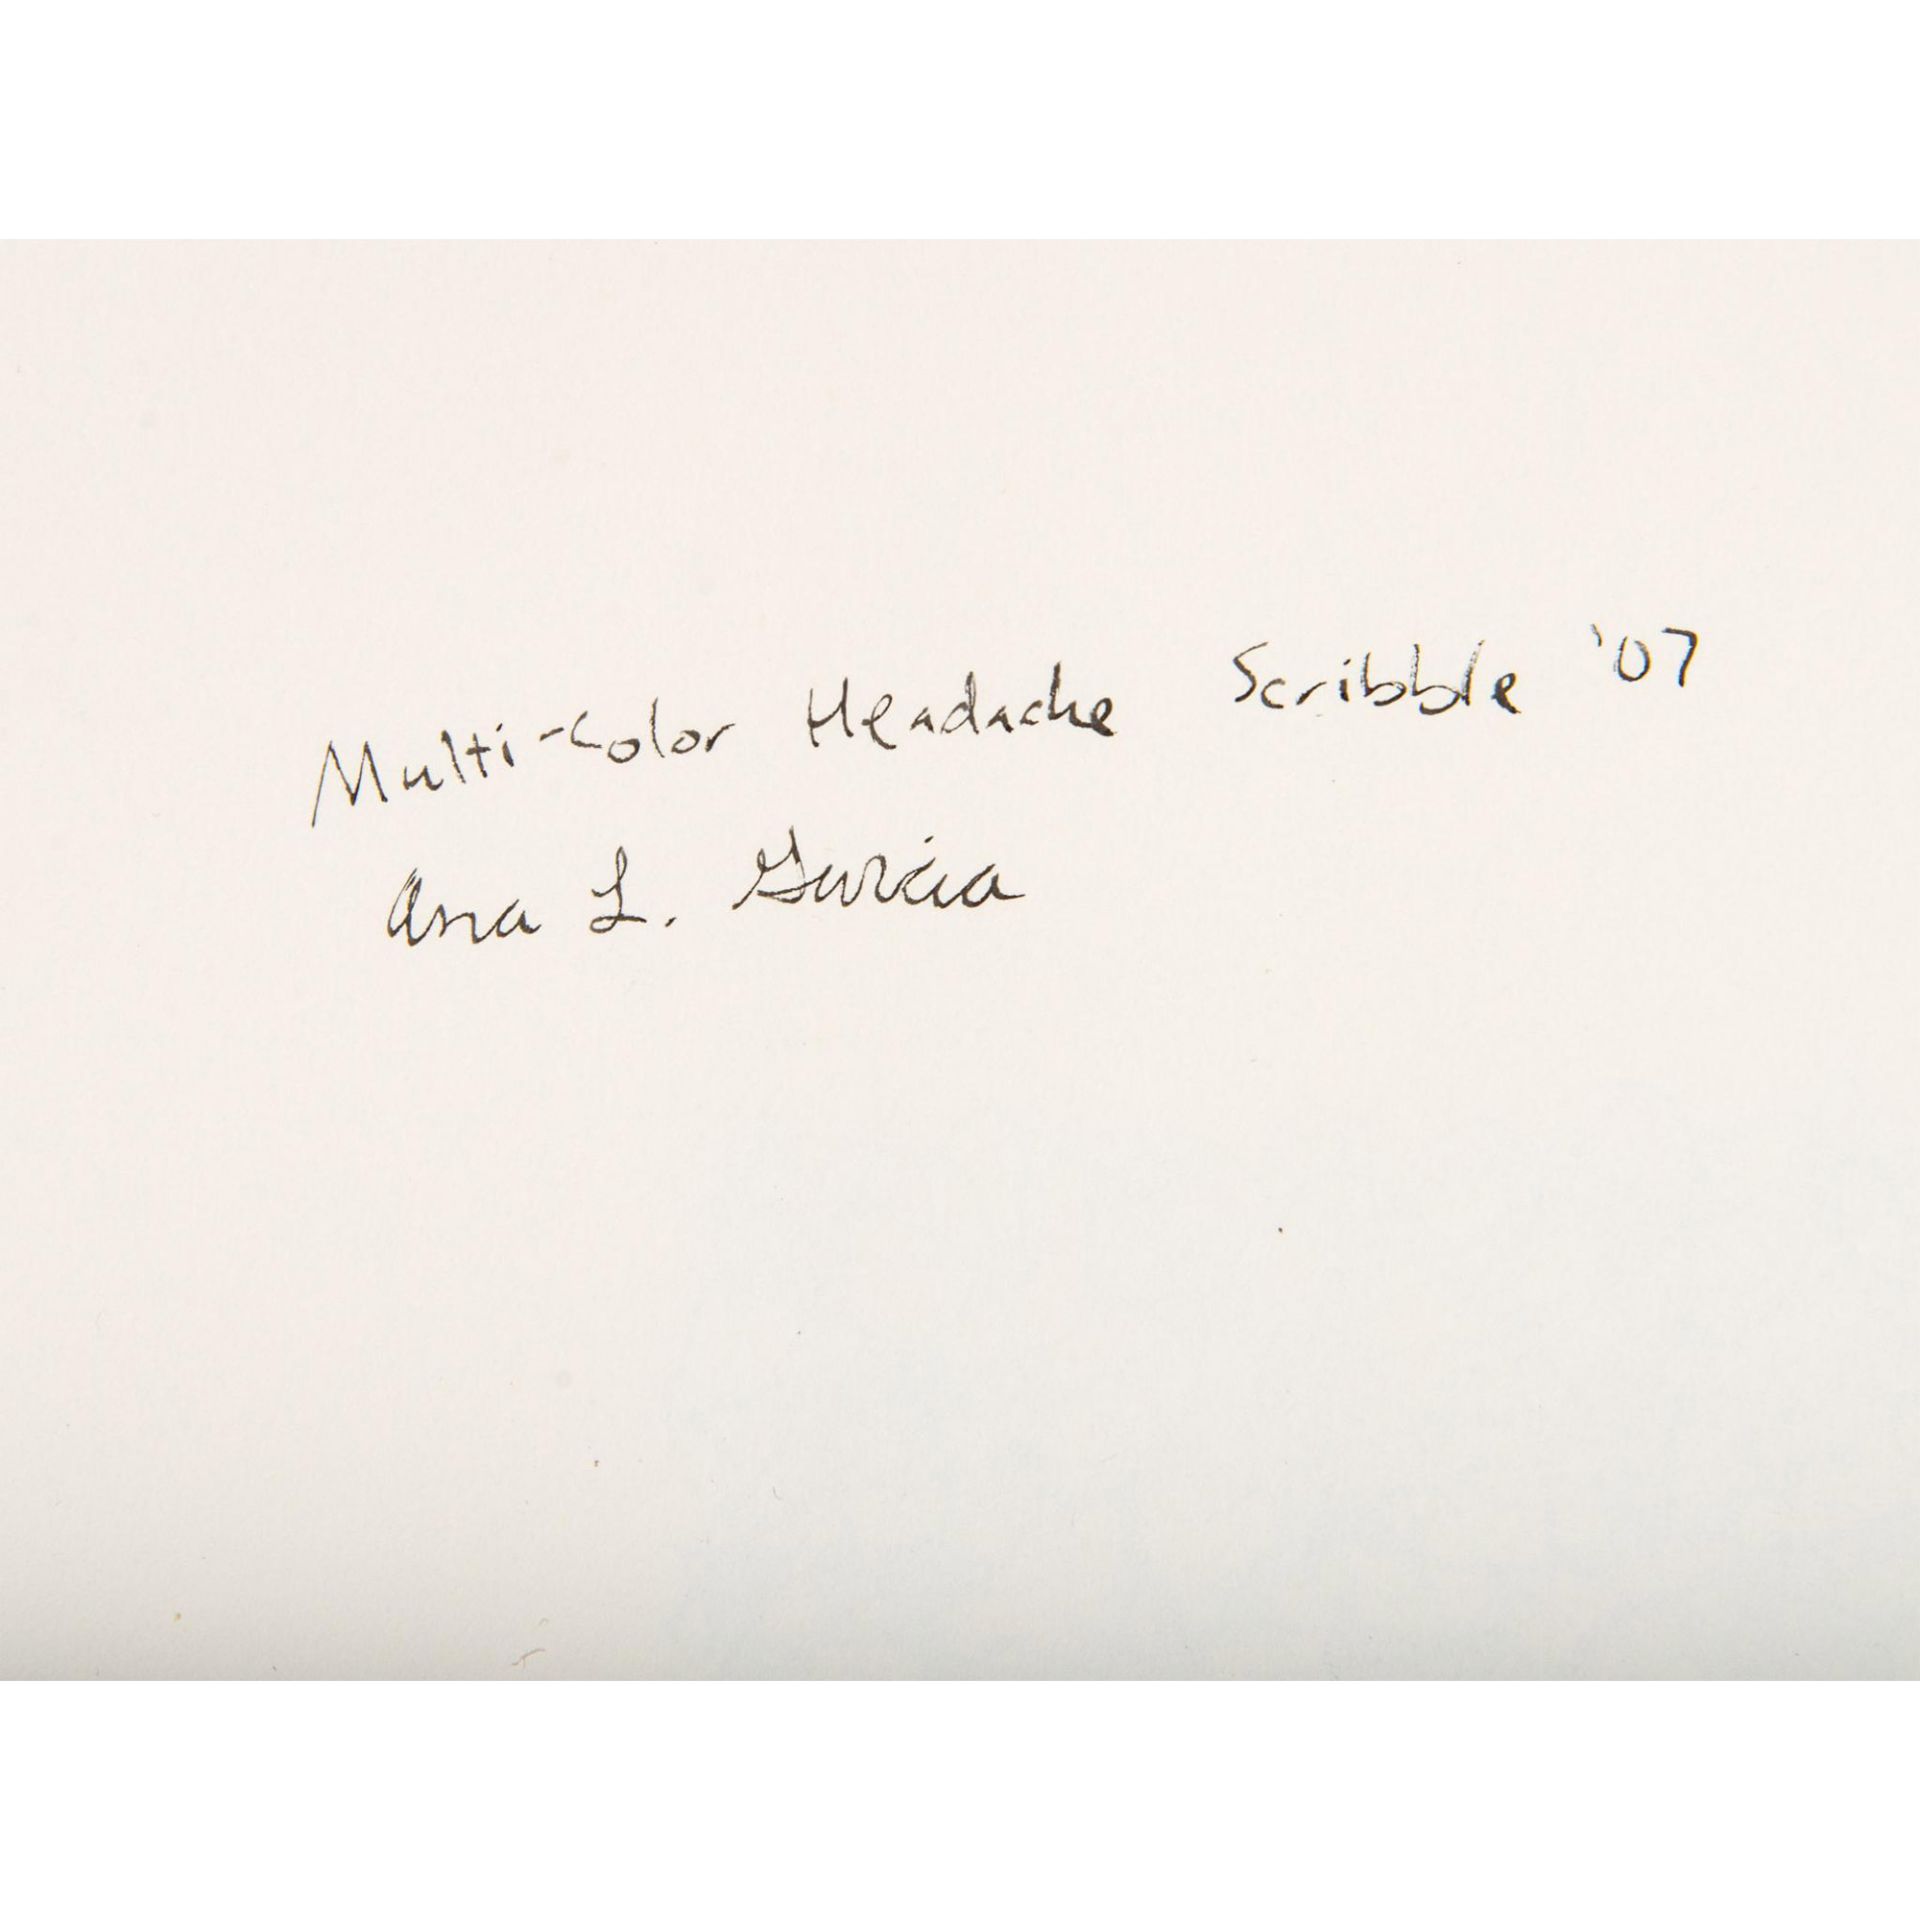 Ana Garcia (American b. 1982) Signed Original Drawing, Multi-color Headache Scribble - Image 5 of 6